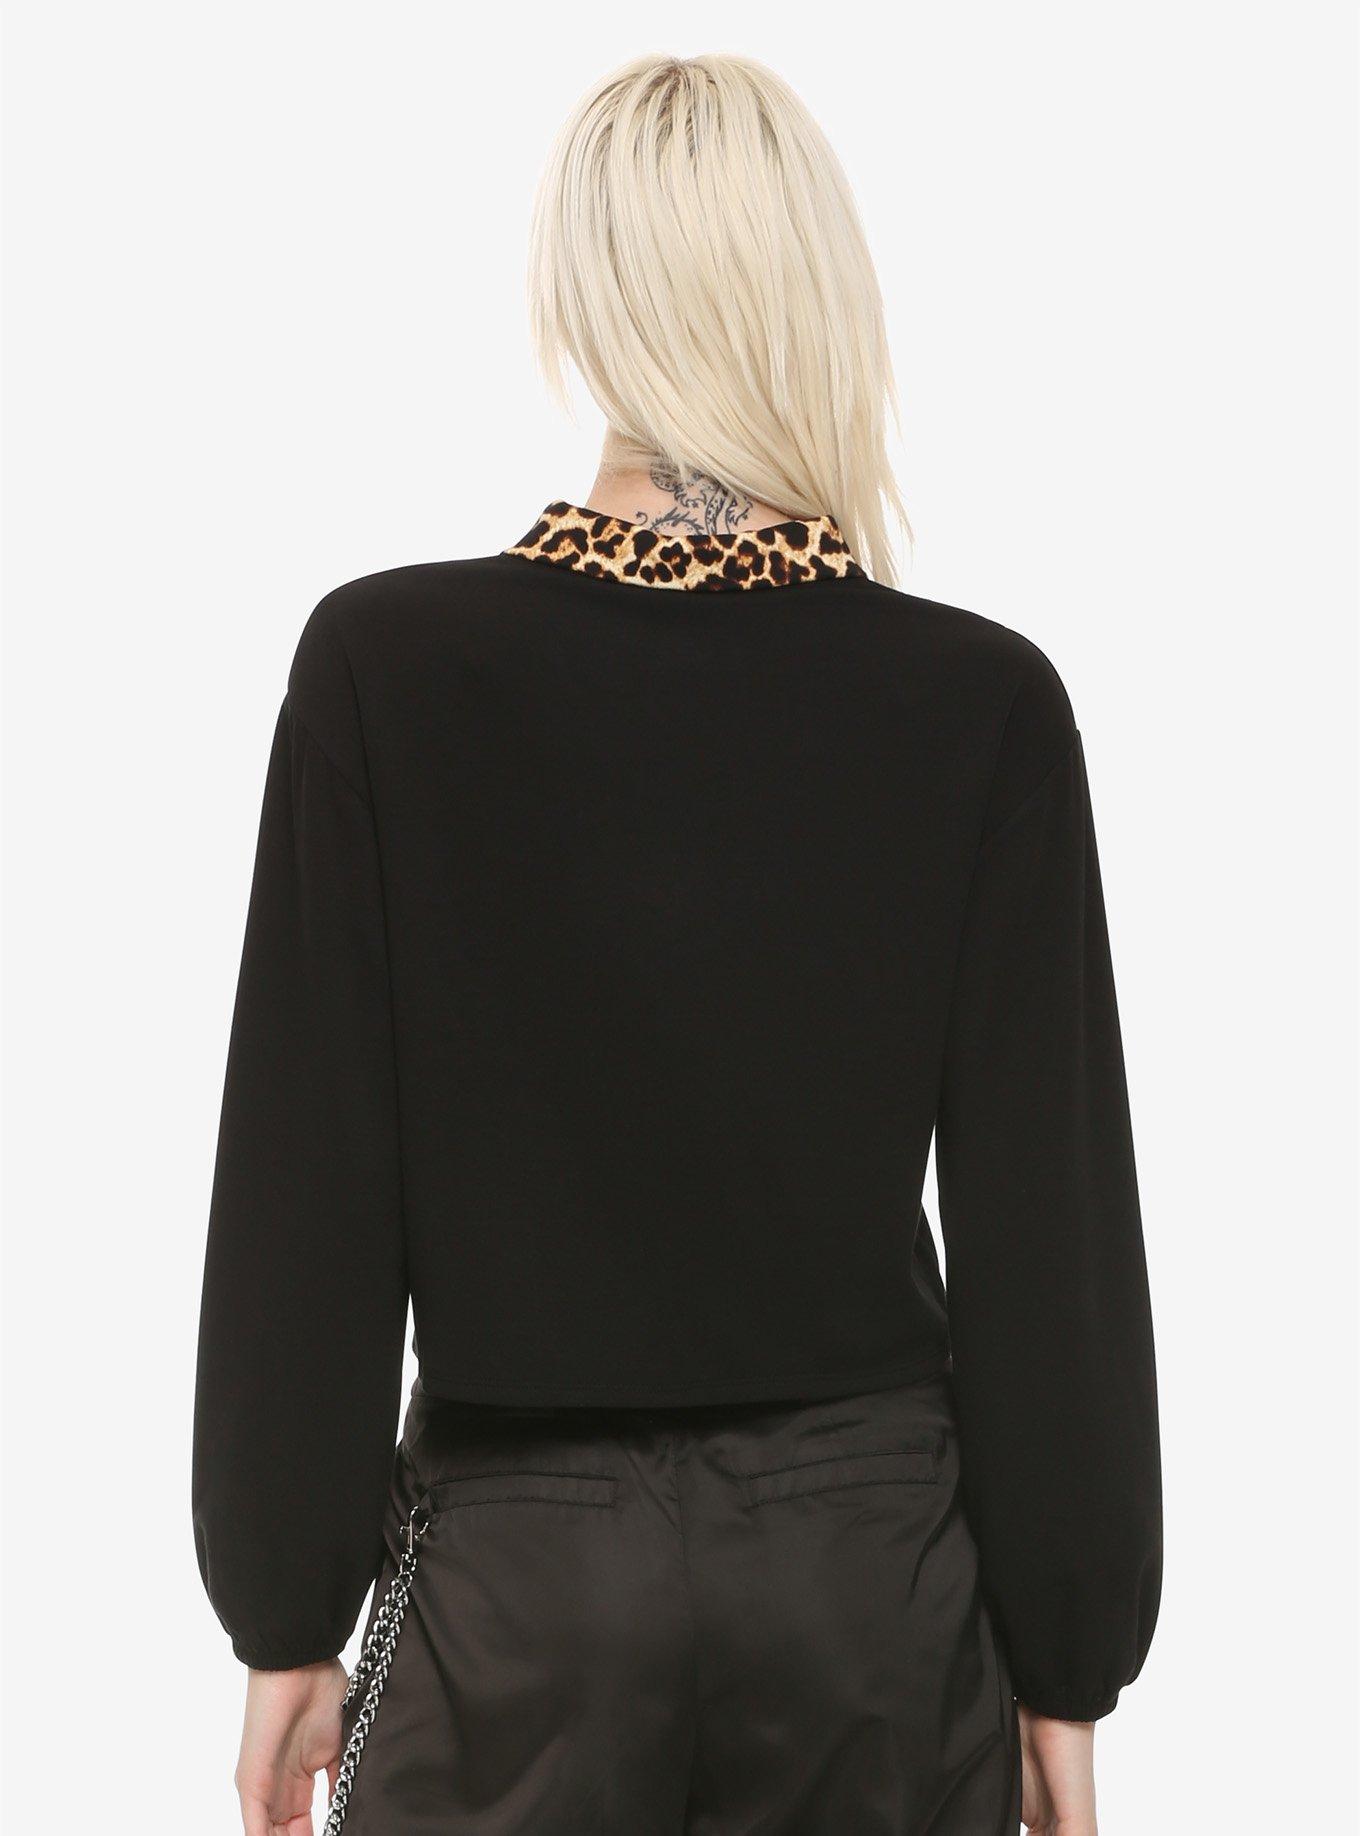 Cheetah Collar Zip-Up Long-Sleeve Crop Top, CHEETAH, alternate